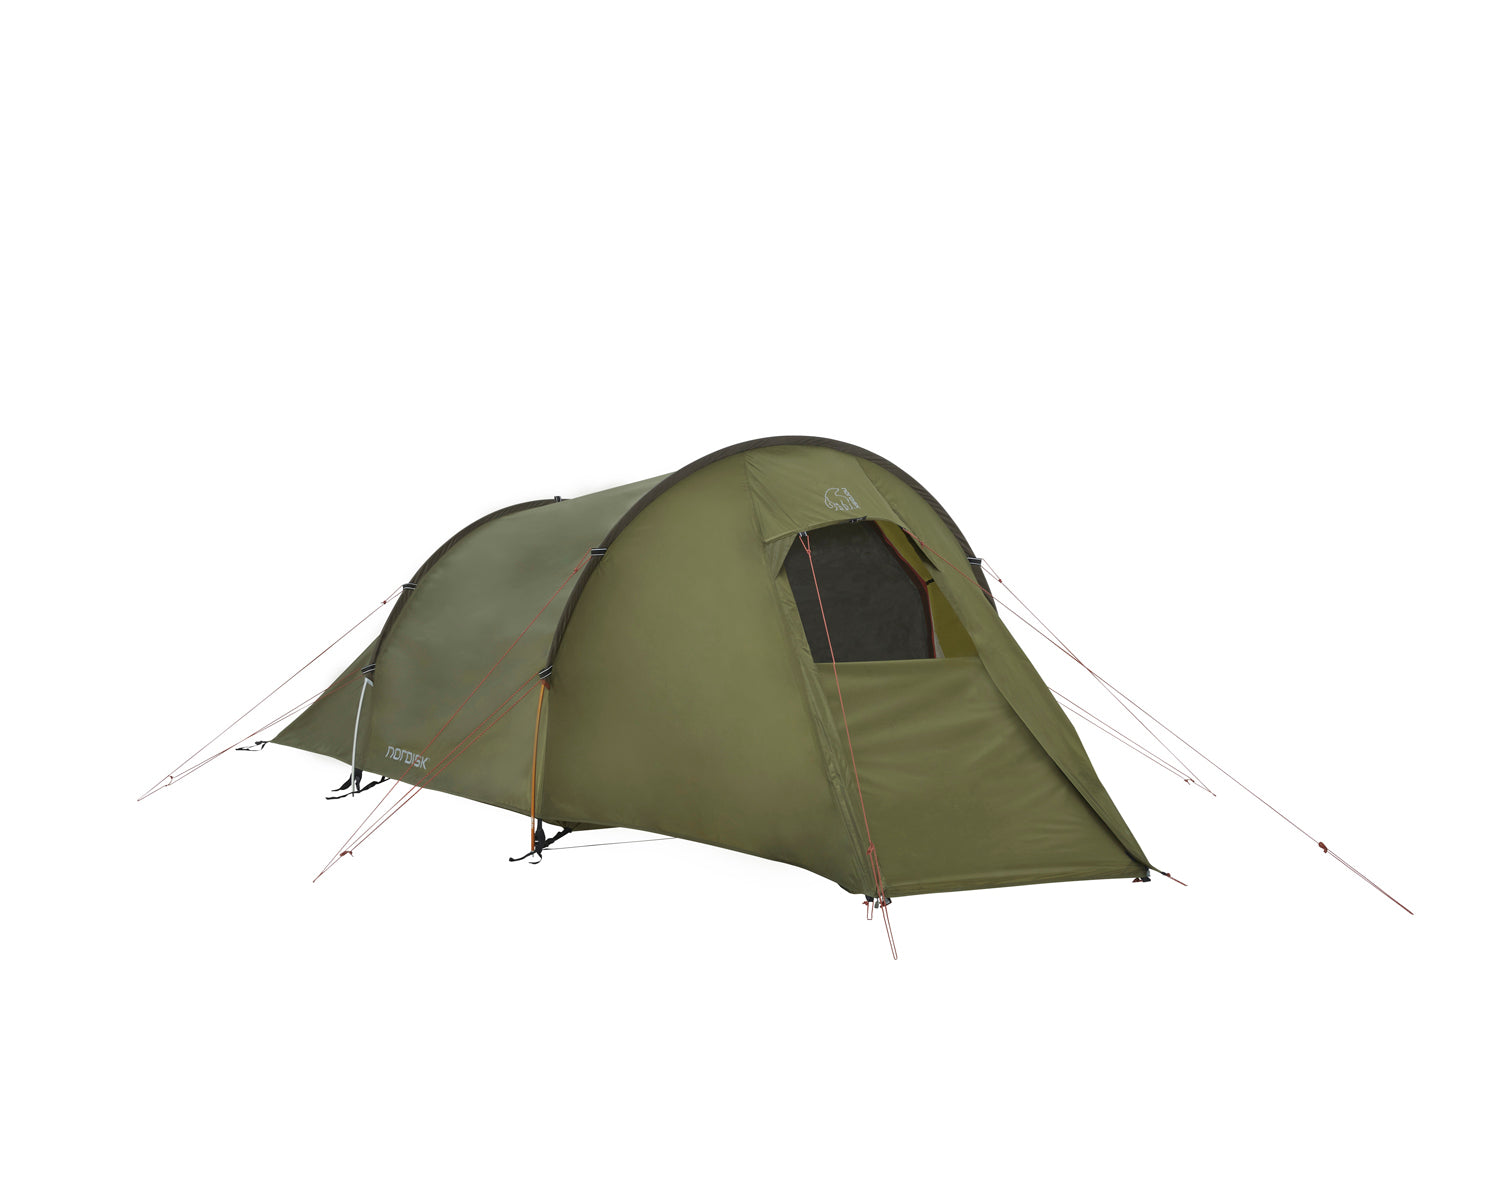 Halland 2 PU tent - 2 person - Dark Olive